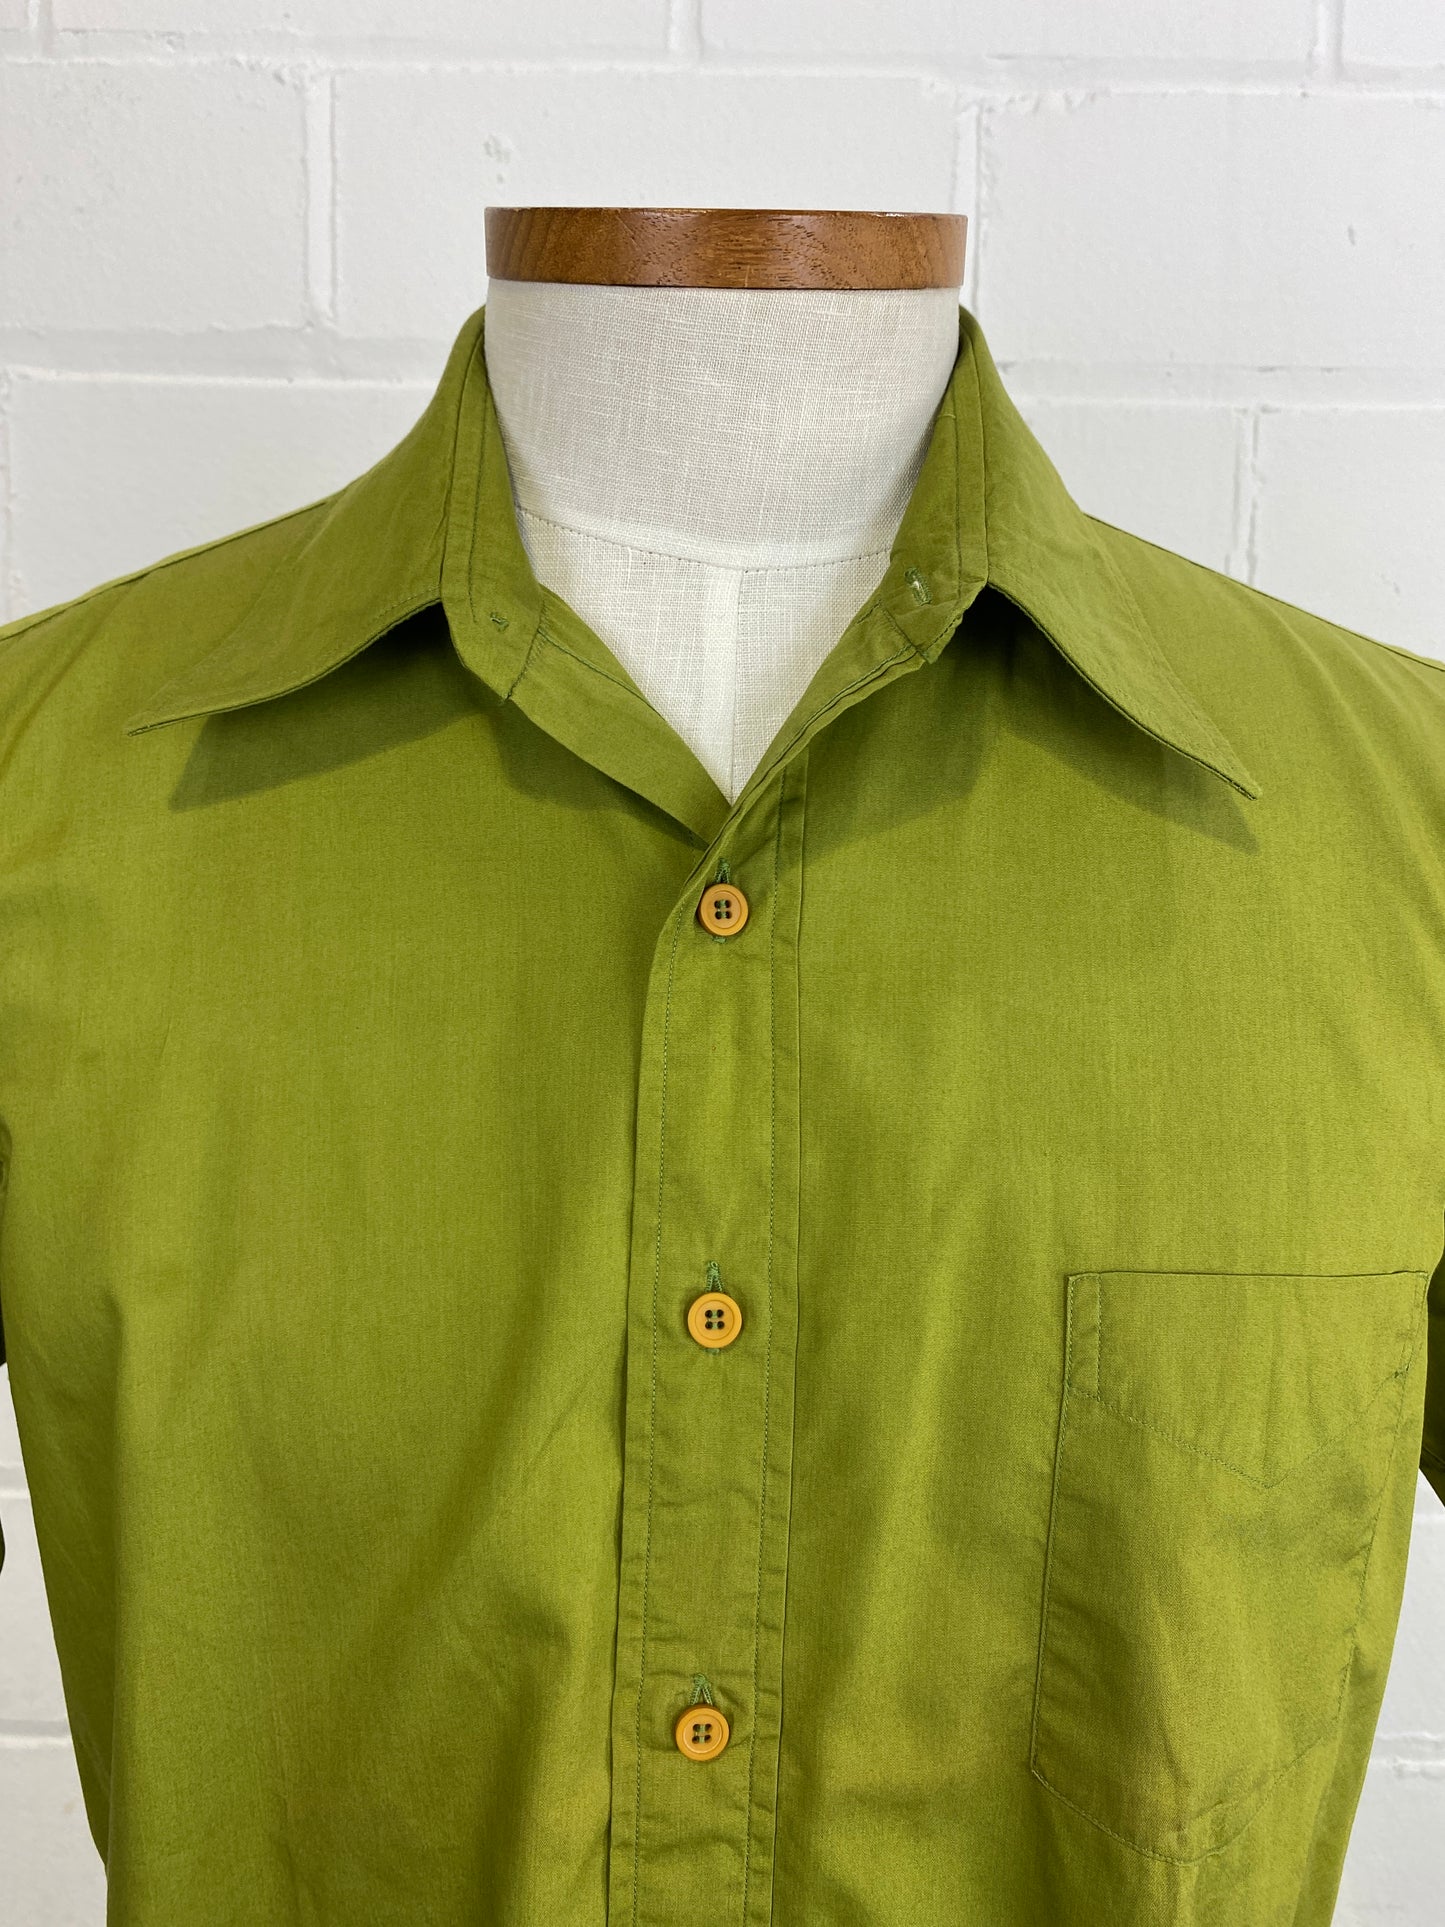 Vintage 70s Men's Short Sleeve Green Cotton Button-Up Shirt, Doubles